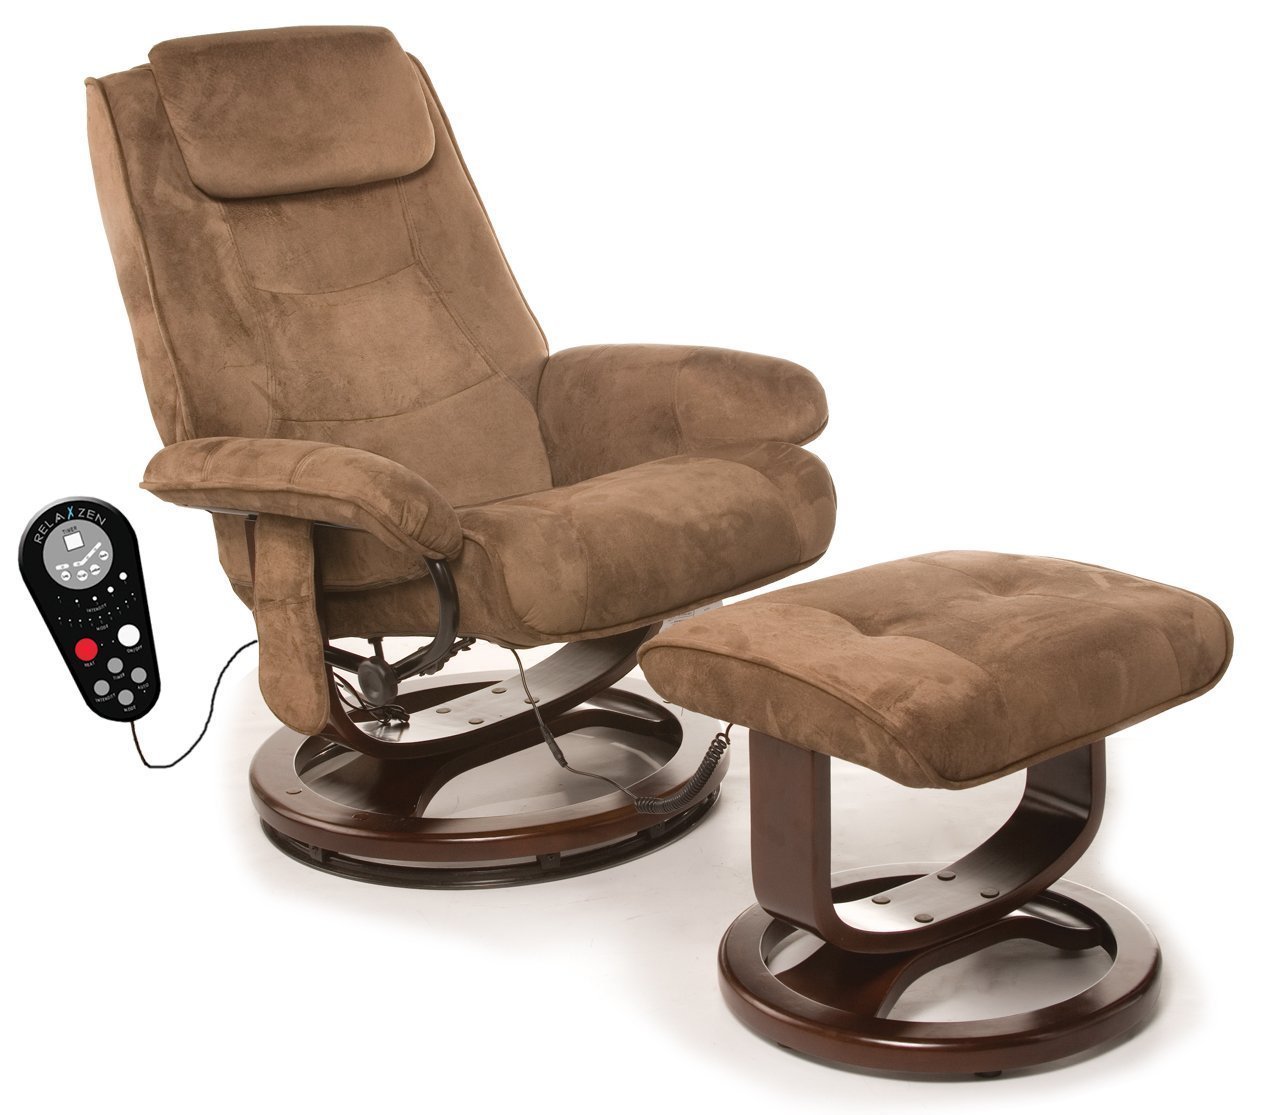 reclining chairs amazon.com: relaxzen 60-078011 deluxe leisure recliner chair with 8-motor  massage u0026 heat, OTGCOER